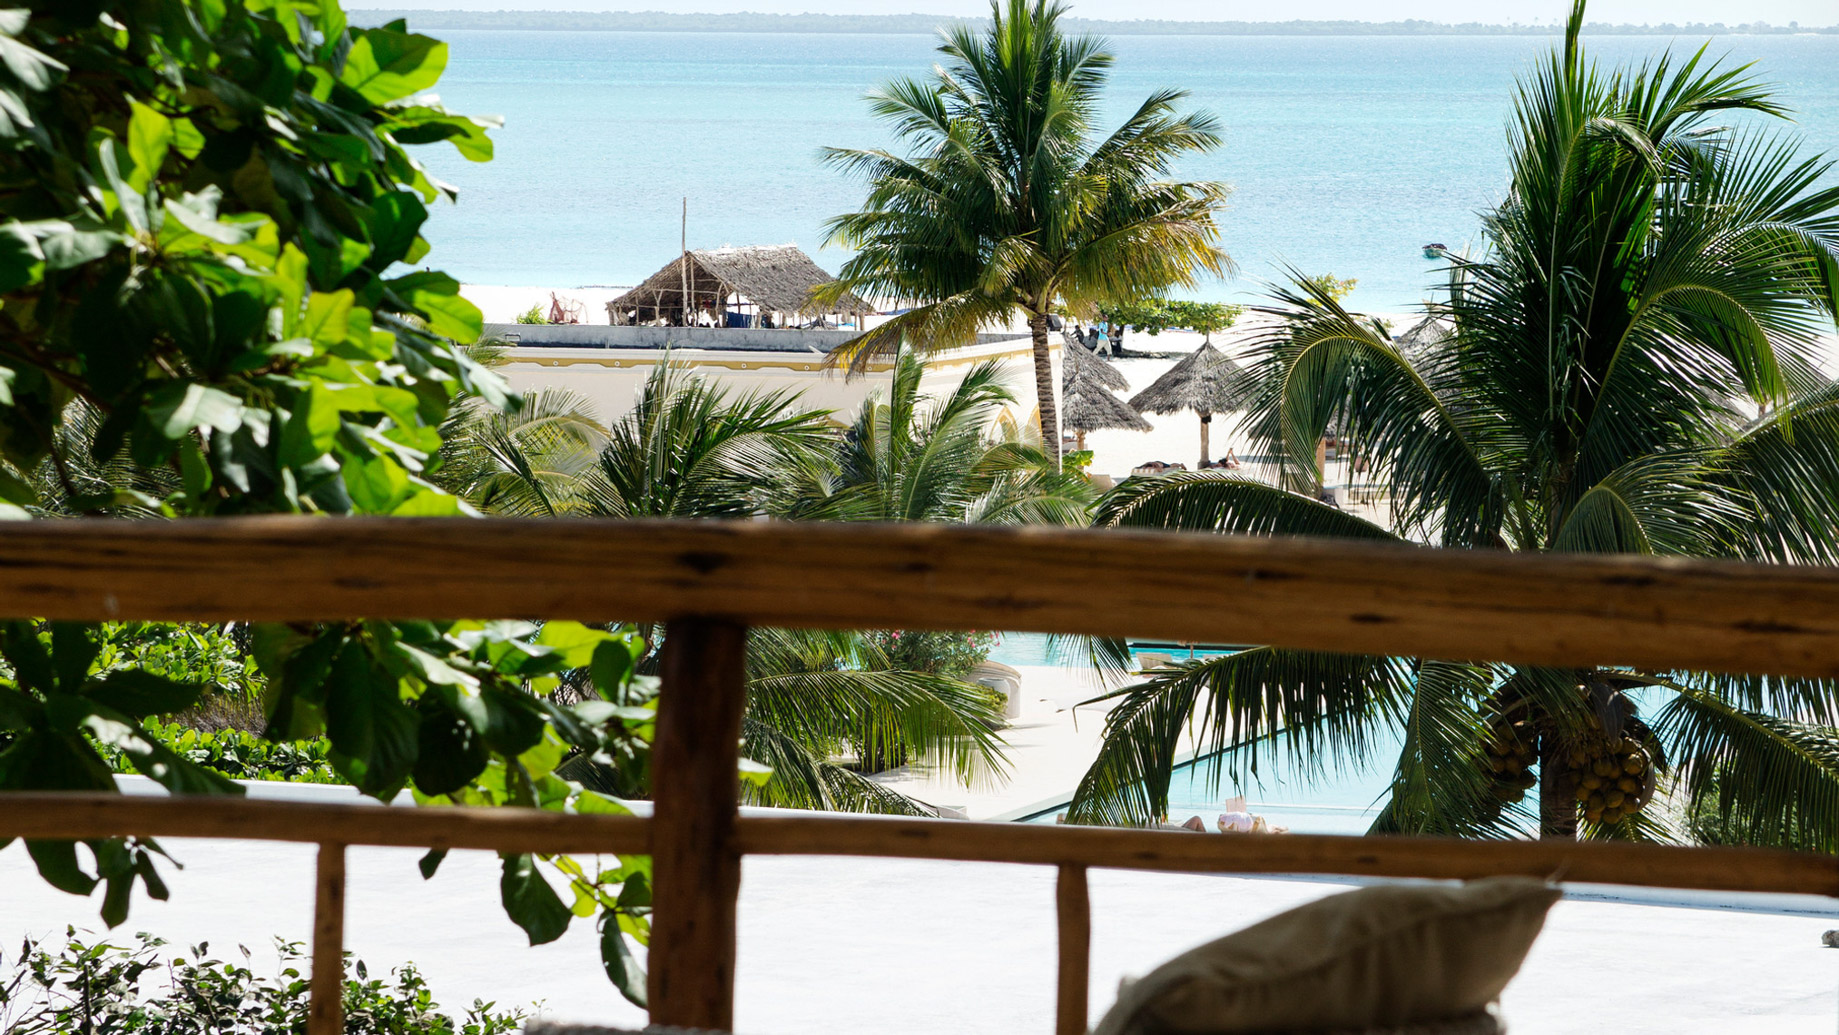 Gold Zanzibar Beach House & Spa Resort – Nungwi, Zanzibar, Tanzania – Deluxe Ocean View Room Terrace View